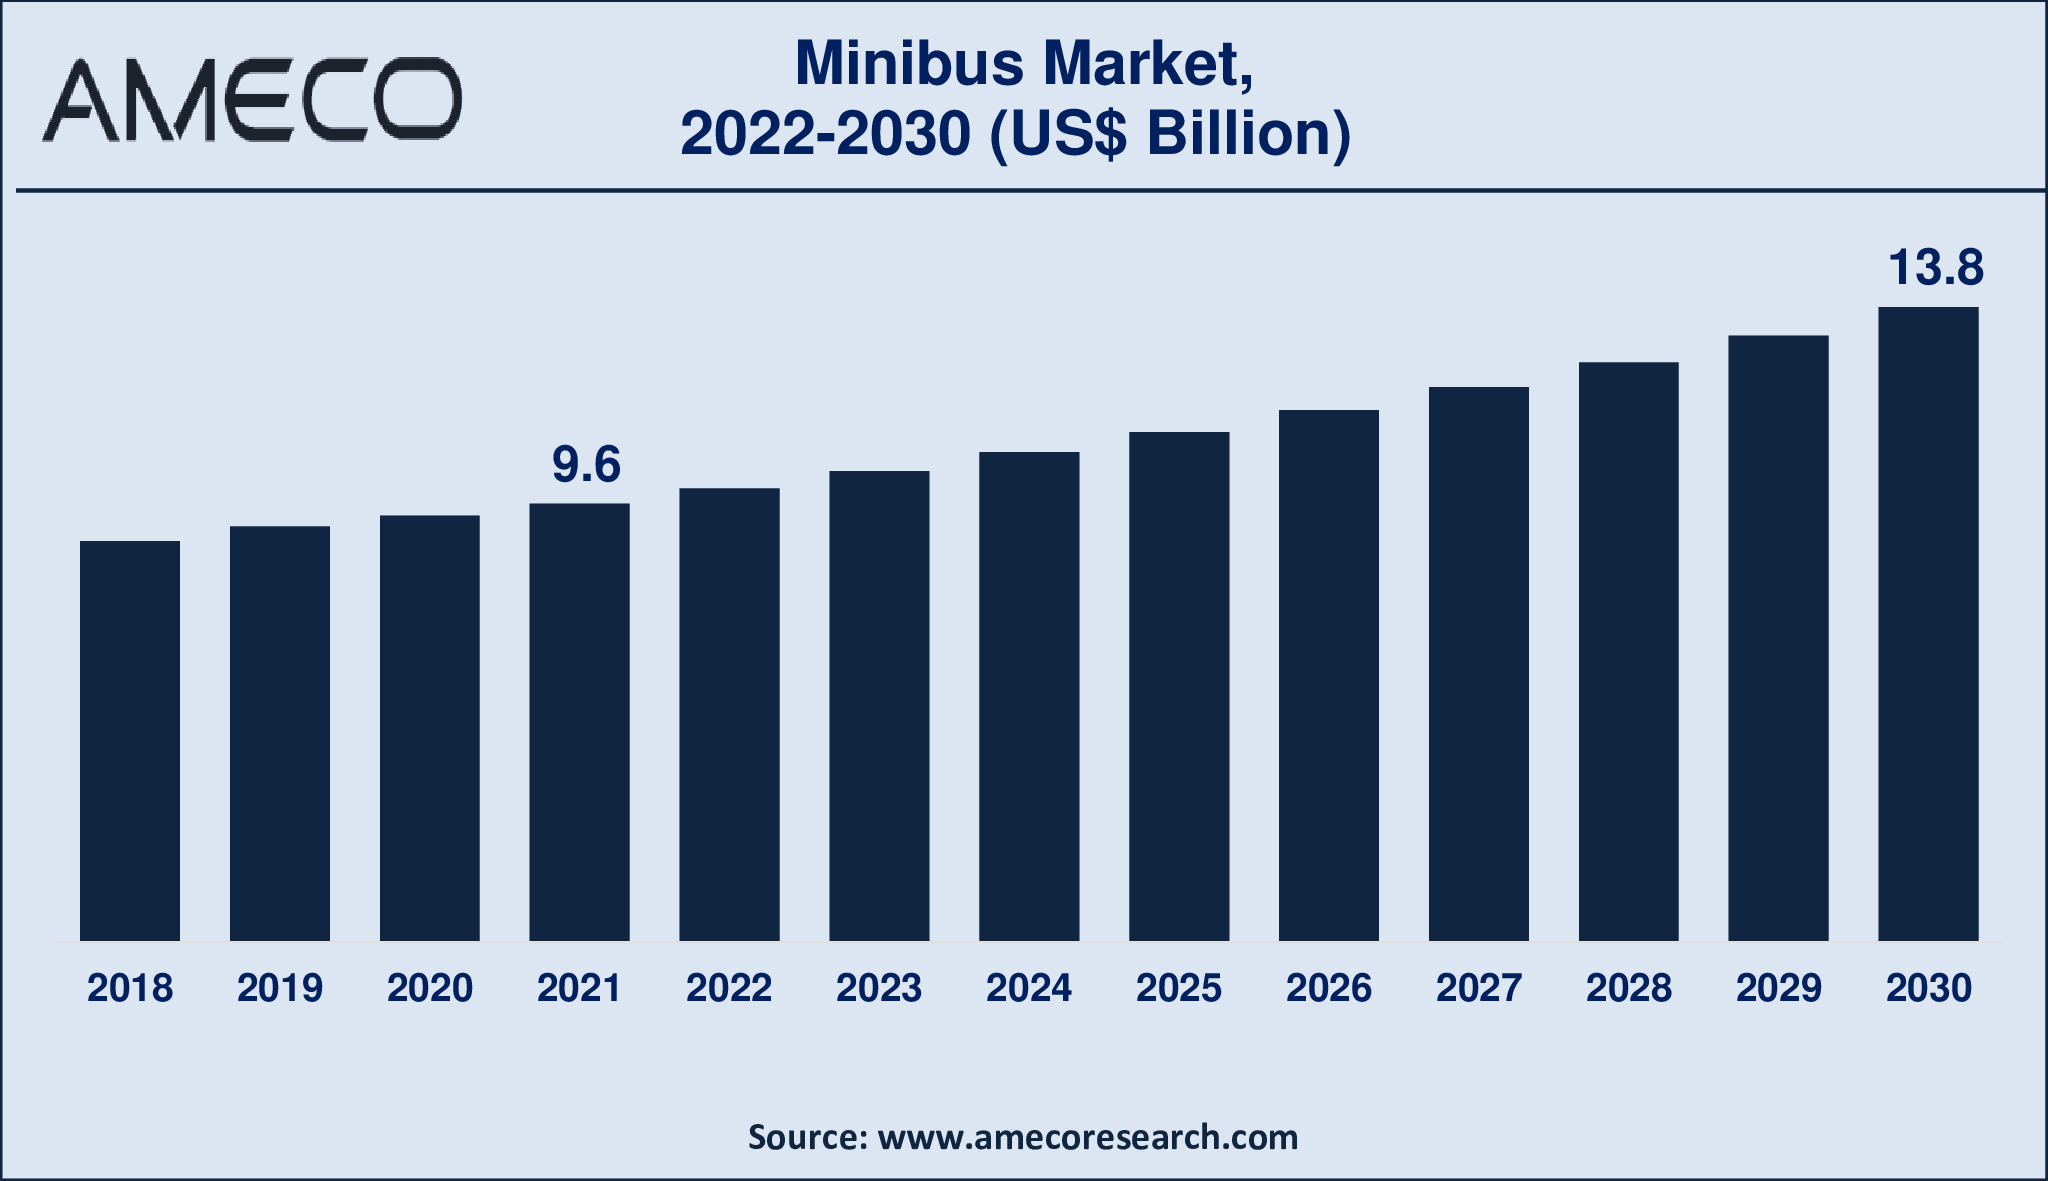 Minibus Market Size